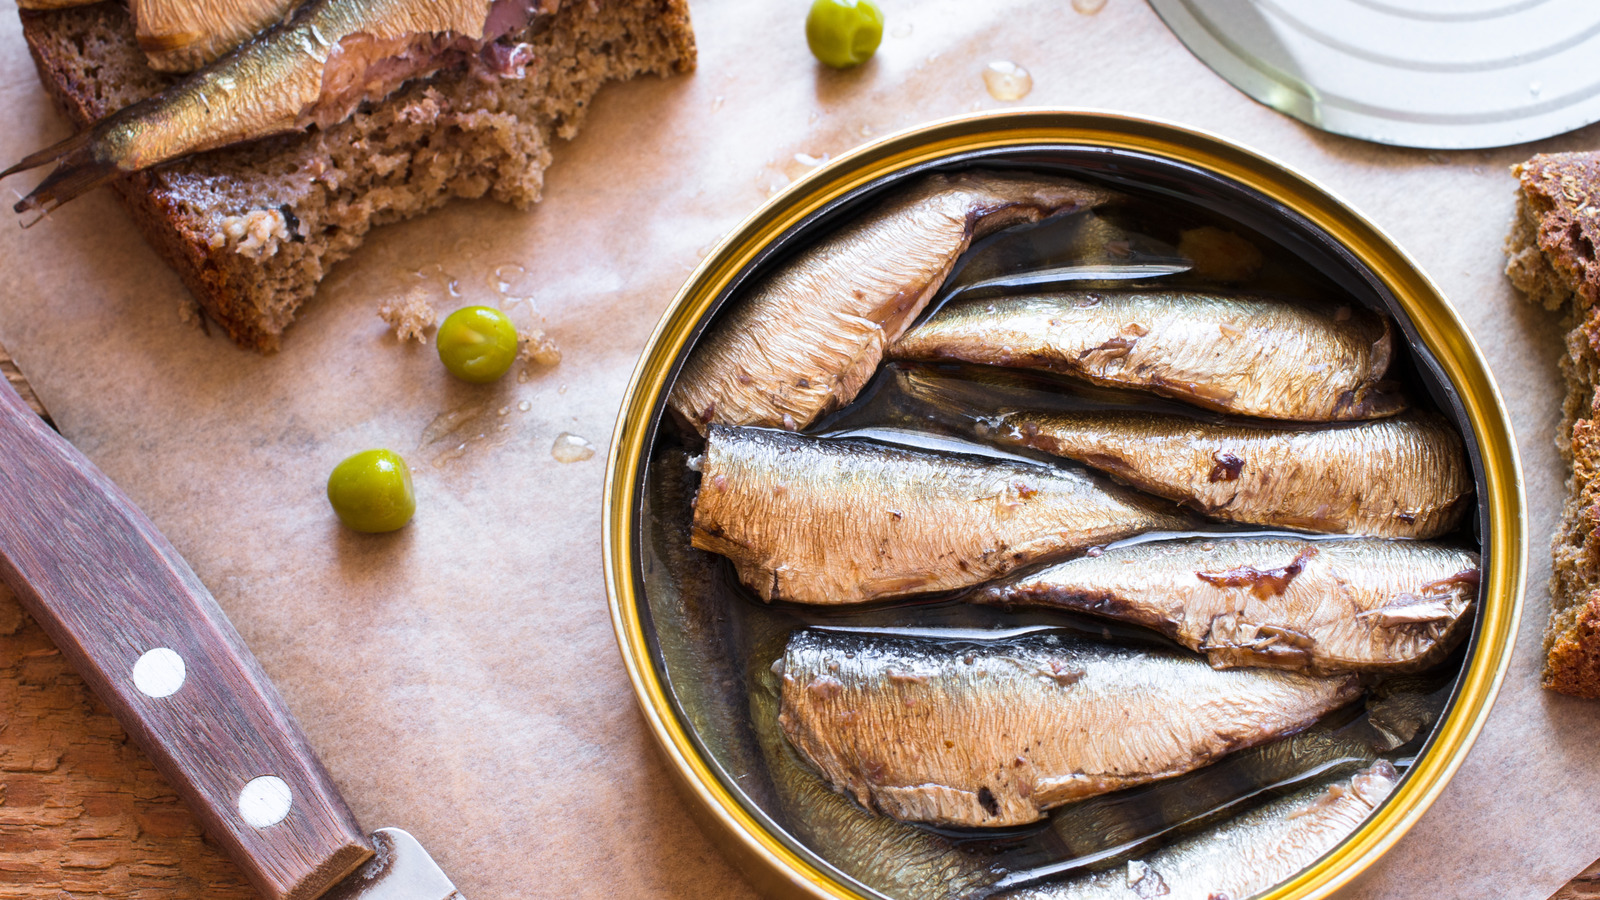 How to Eat Sardines